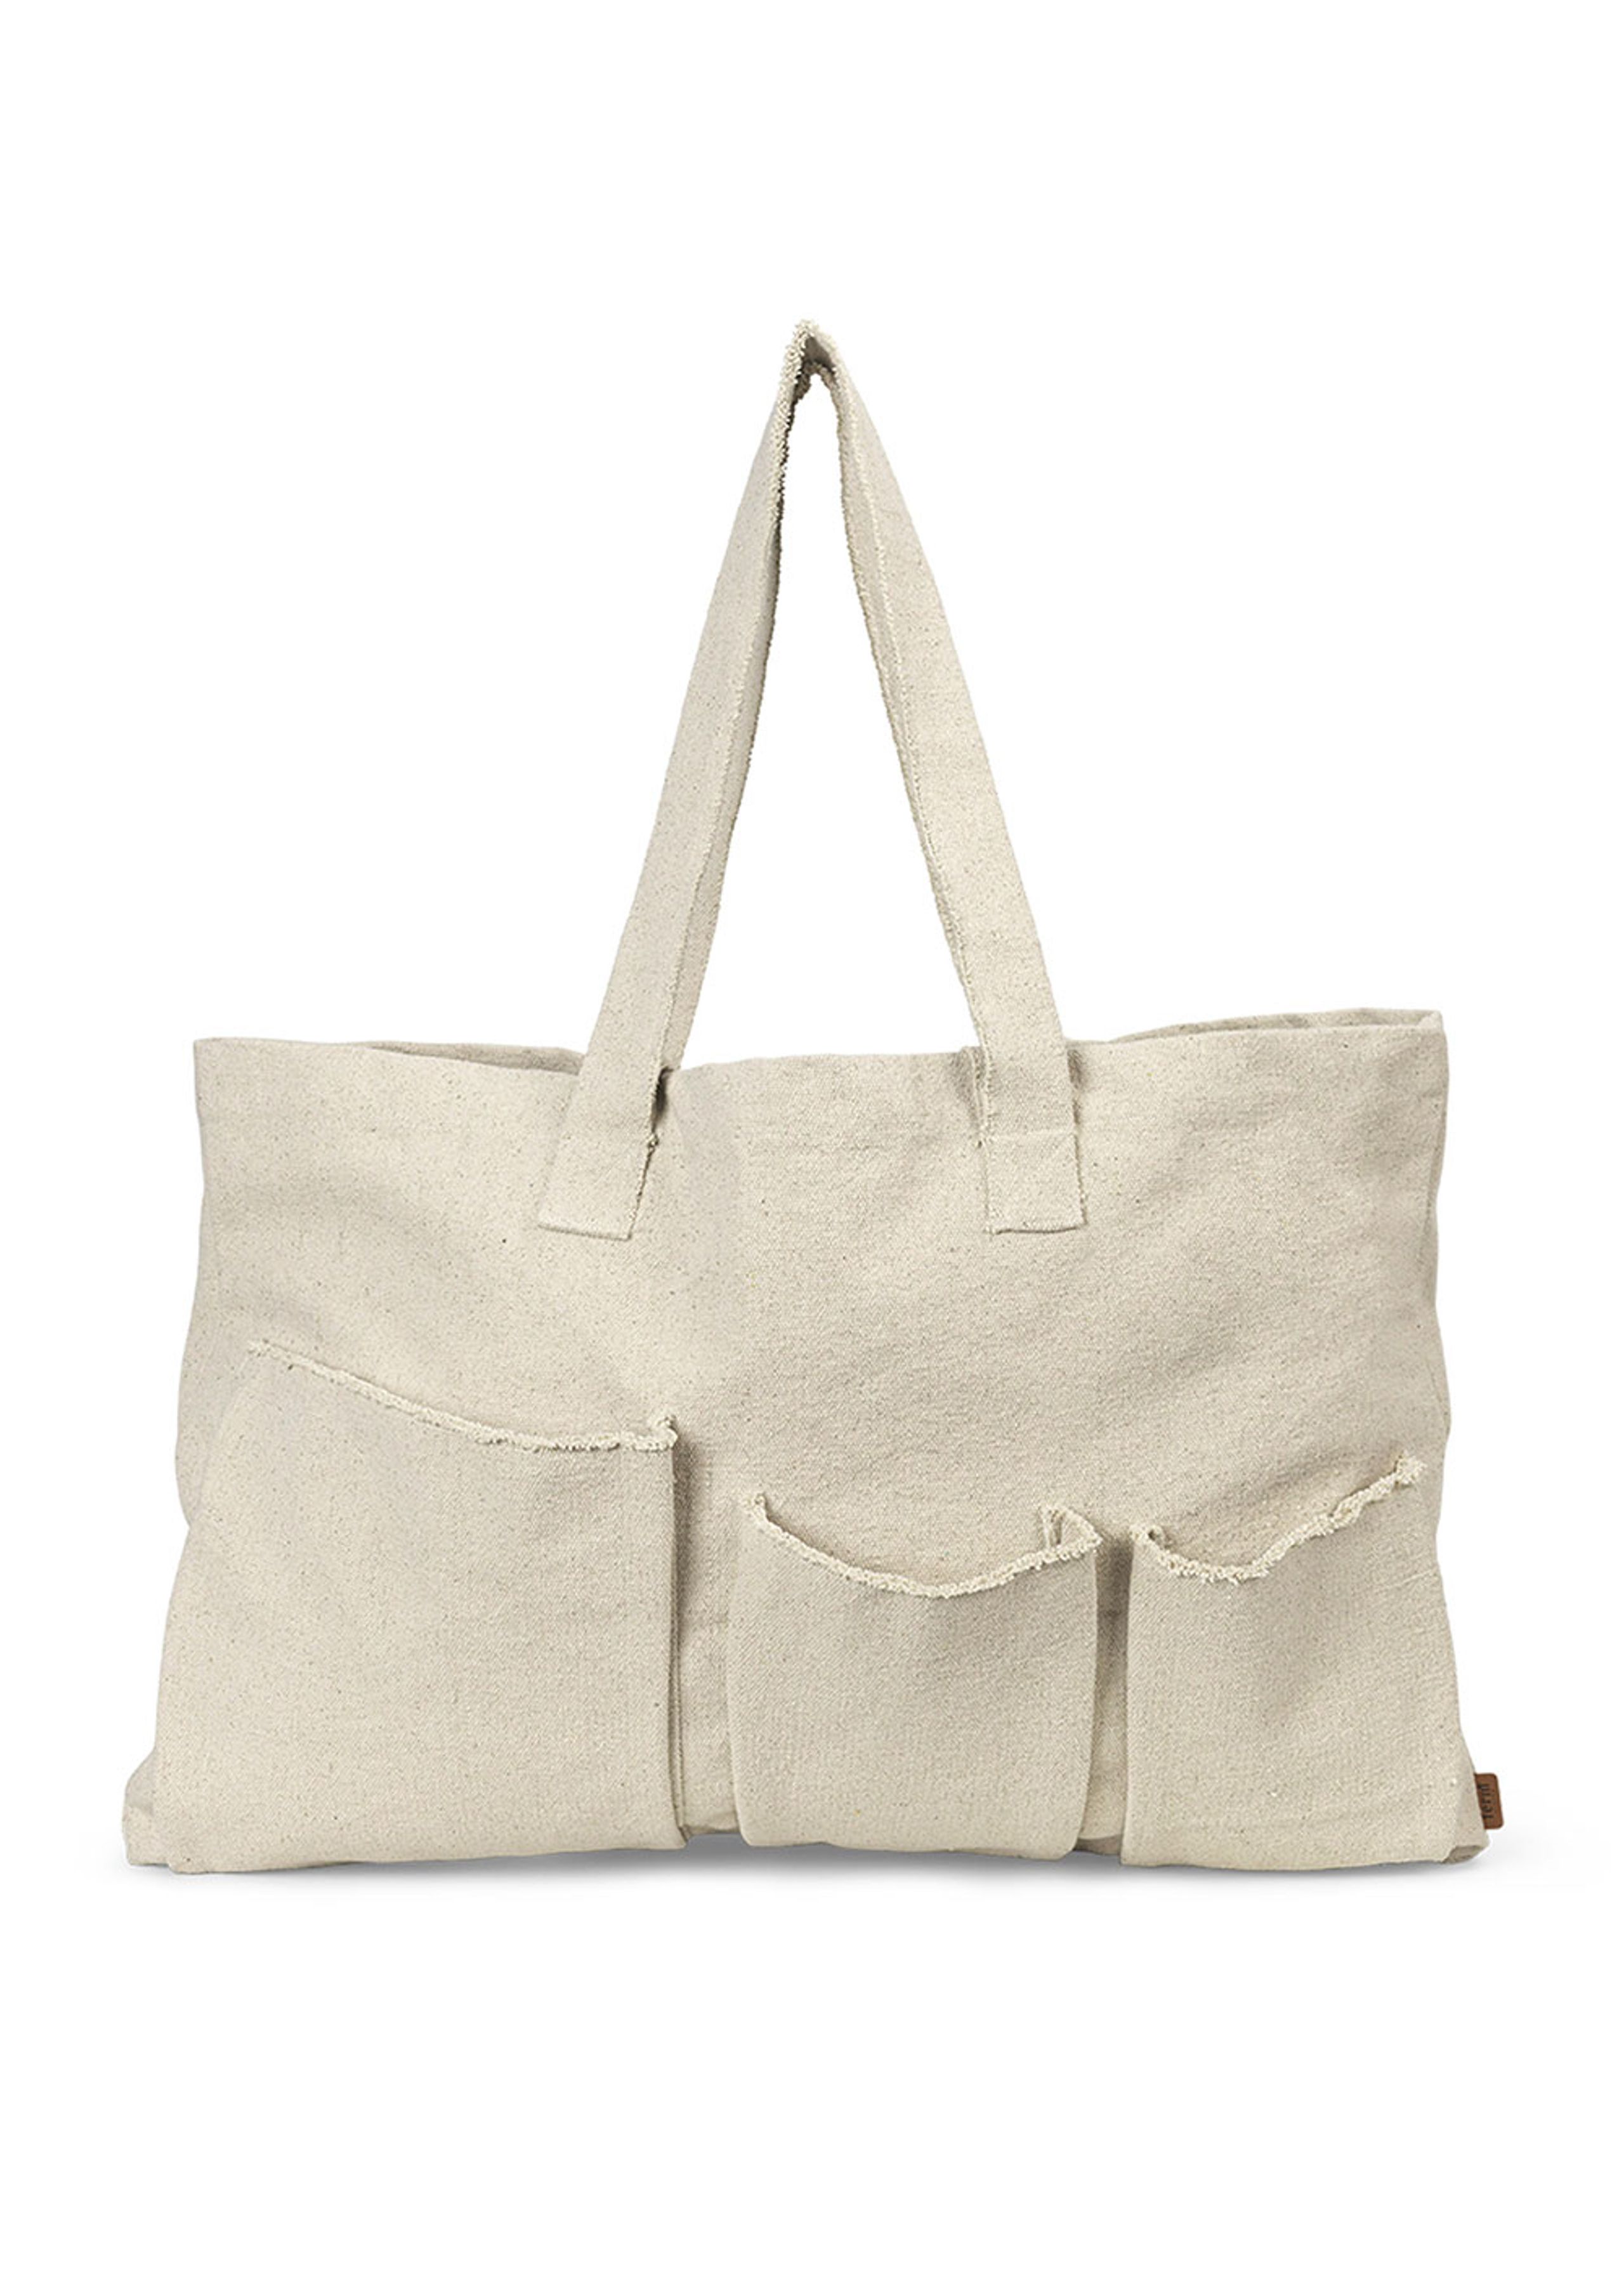 Ferm Living - Tasche - Pocket Weekend Bag - Off-white